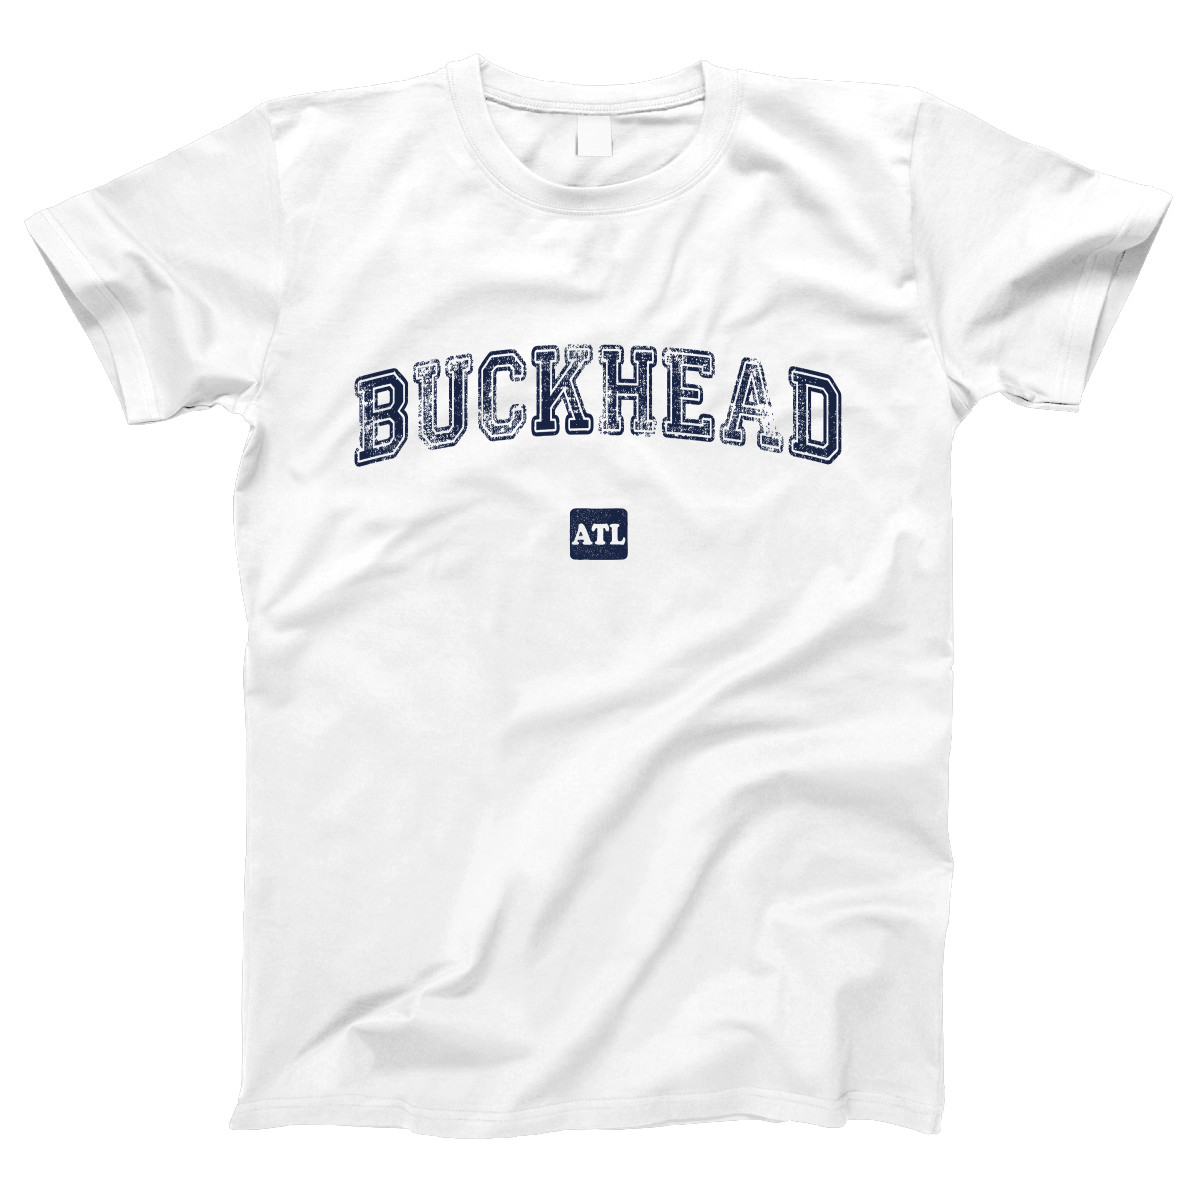 Buckhead ATL Represent Women's T-shirt | White